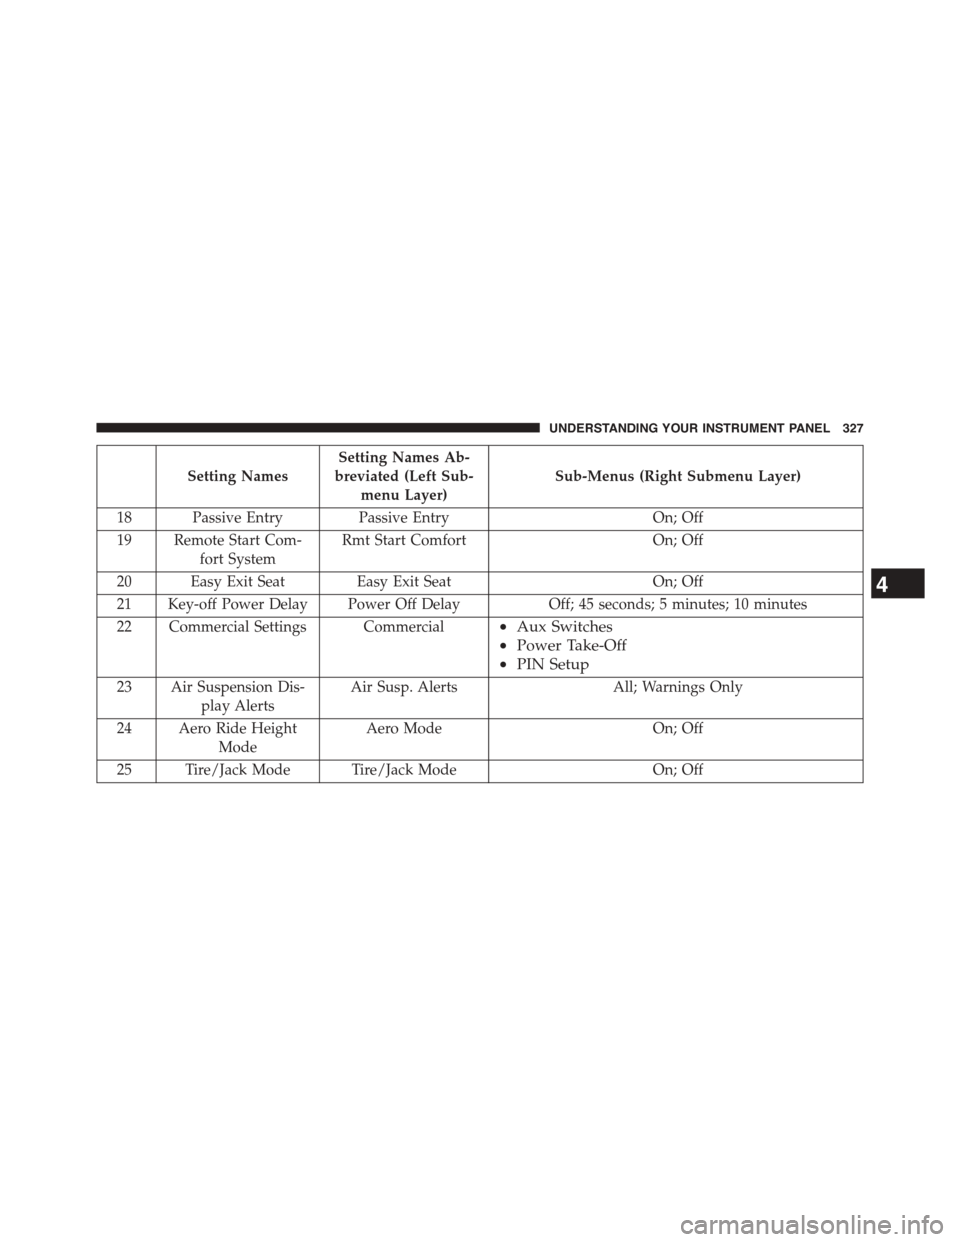 Ram 1500 2015  Owners Manual Setting Names
Setting Names Ab-
breviated (Left Sub-
menu Layer)
Sub-Menus (Right Submenu Layer)
18 Passive EntryPassive EntryOn; Off
19 Remote Start Com-
fort System
Rmt Start ComfortOn; Off
20 Easy 